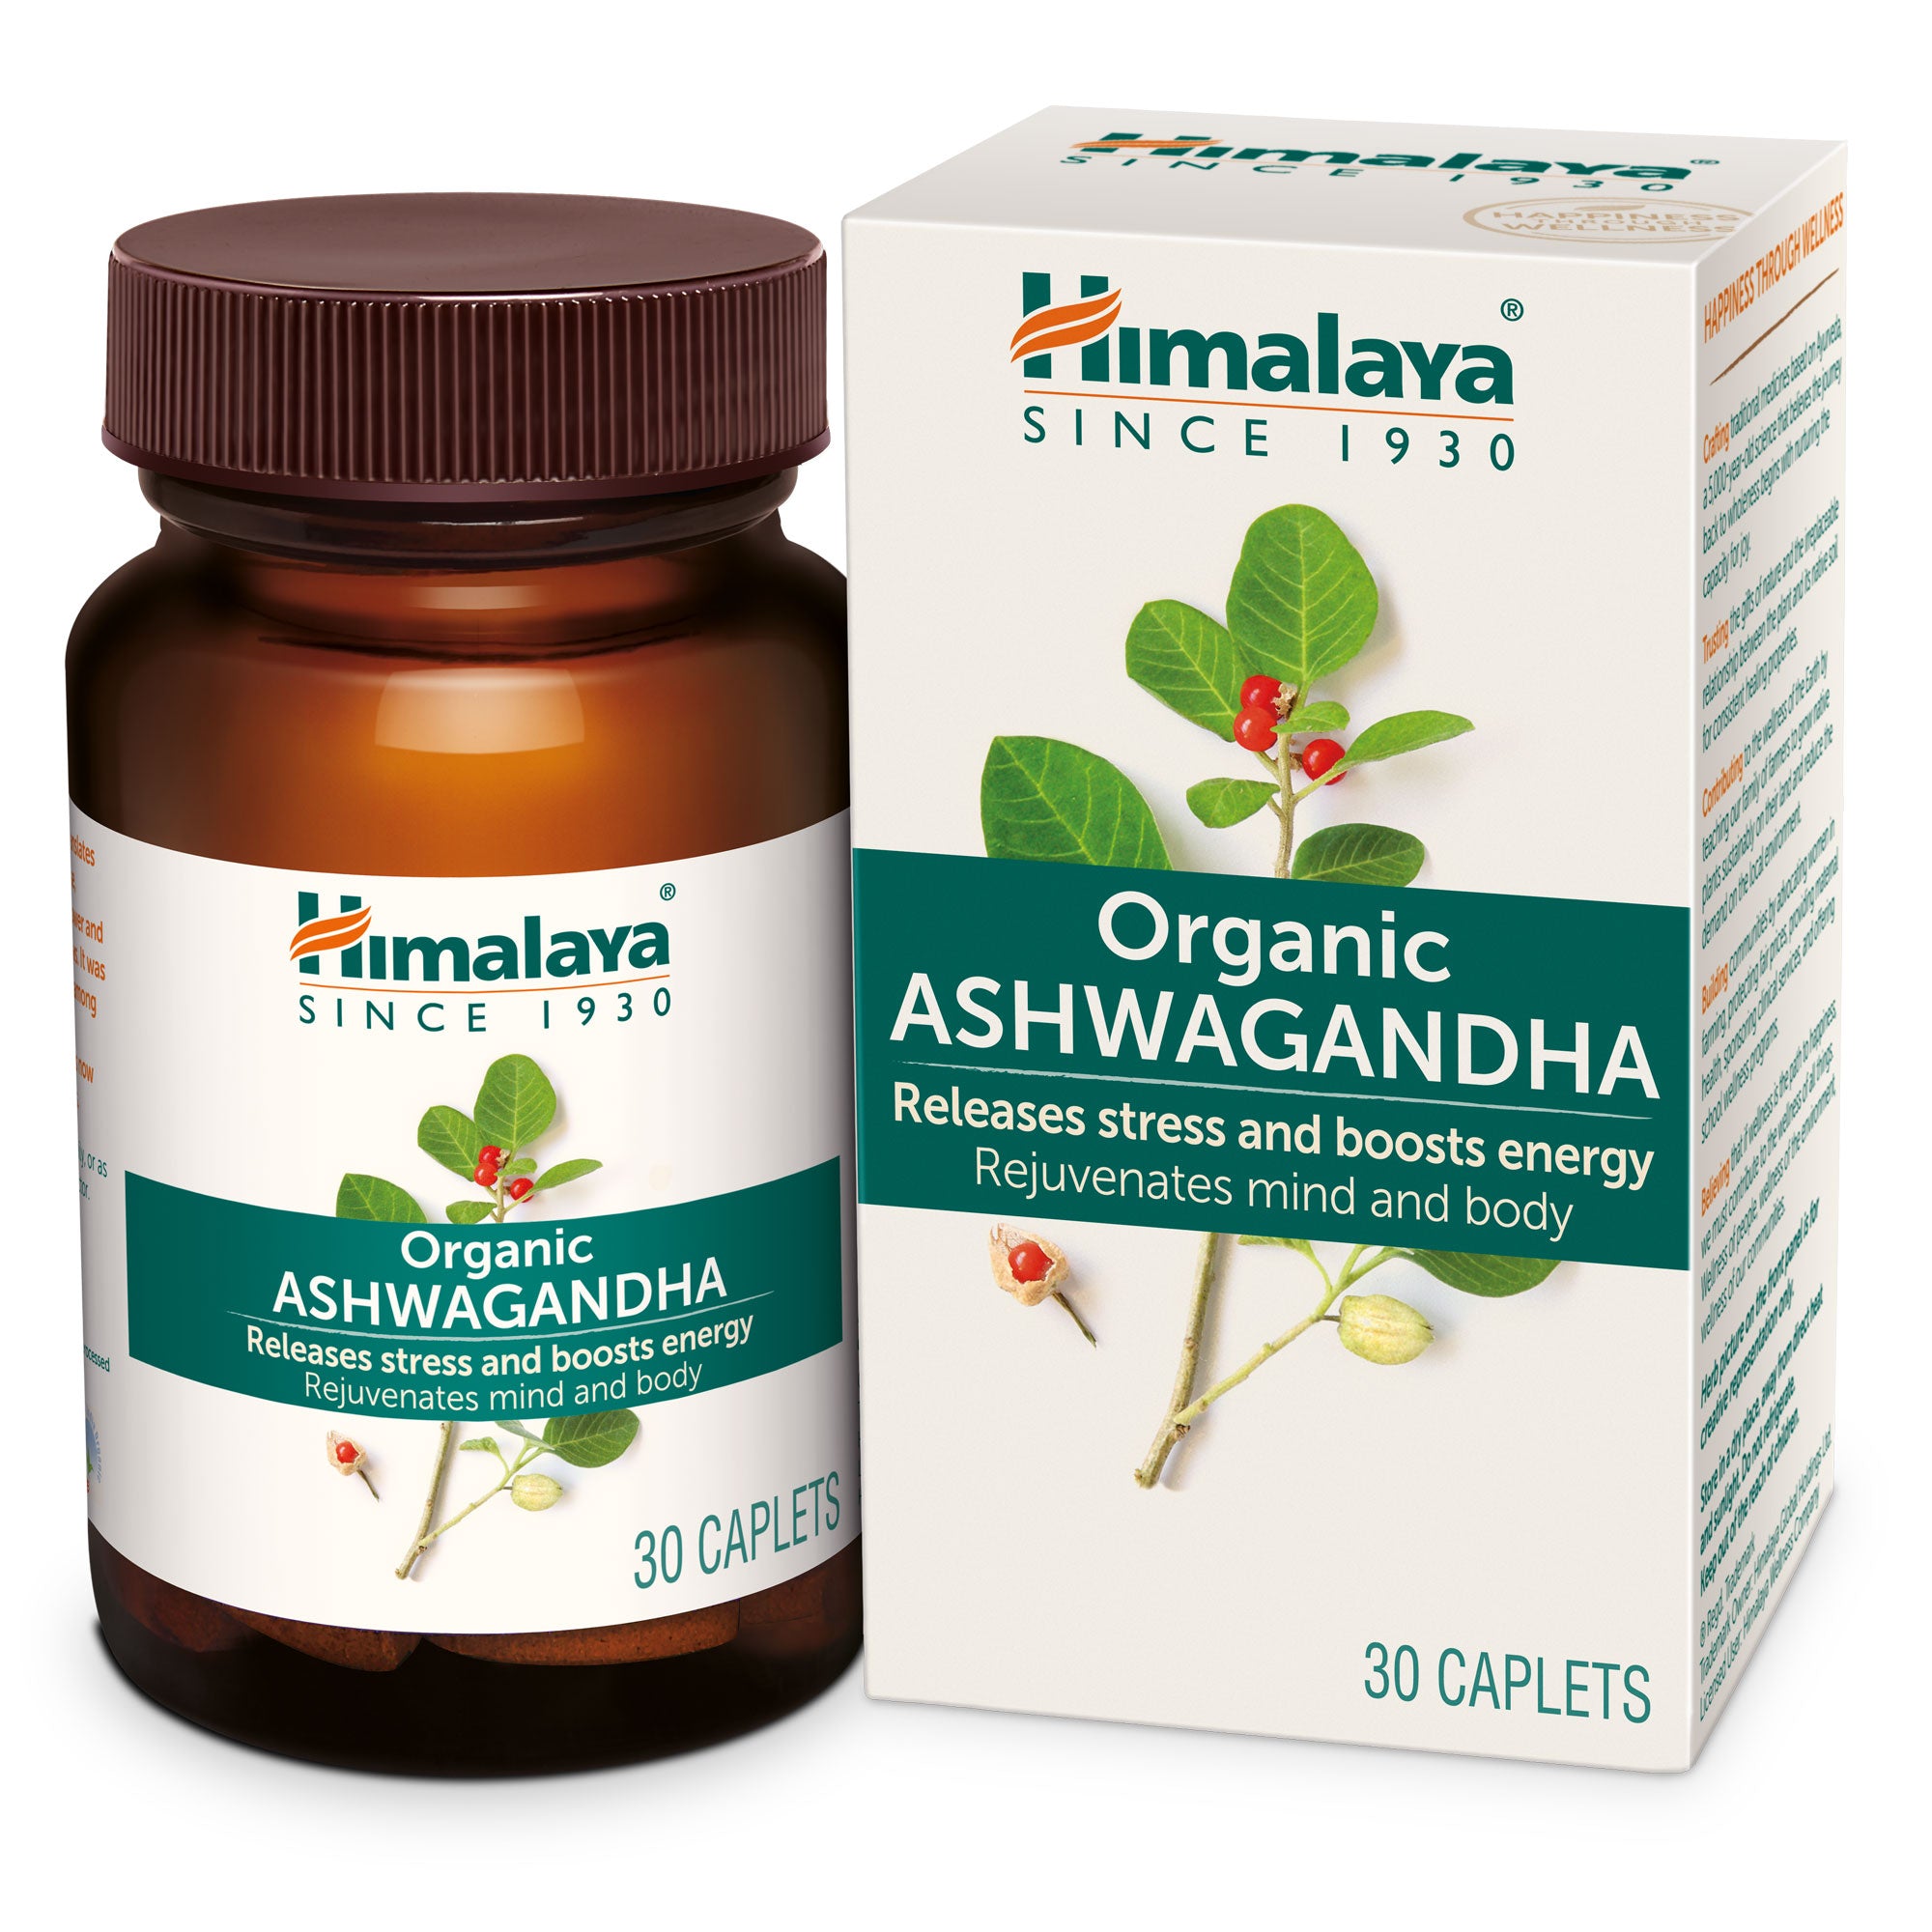 Himalaya Organic Ashwagandha 30 Caplets